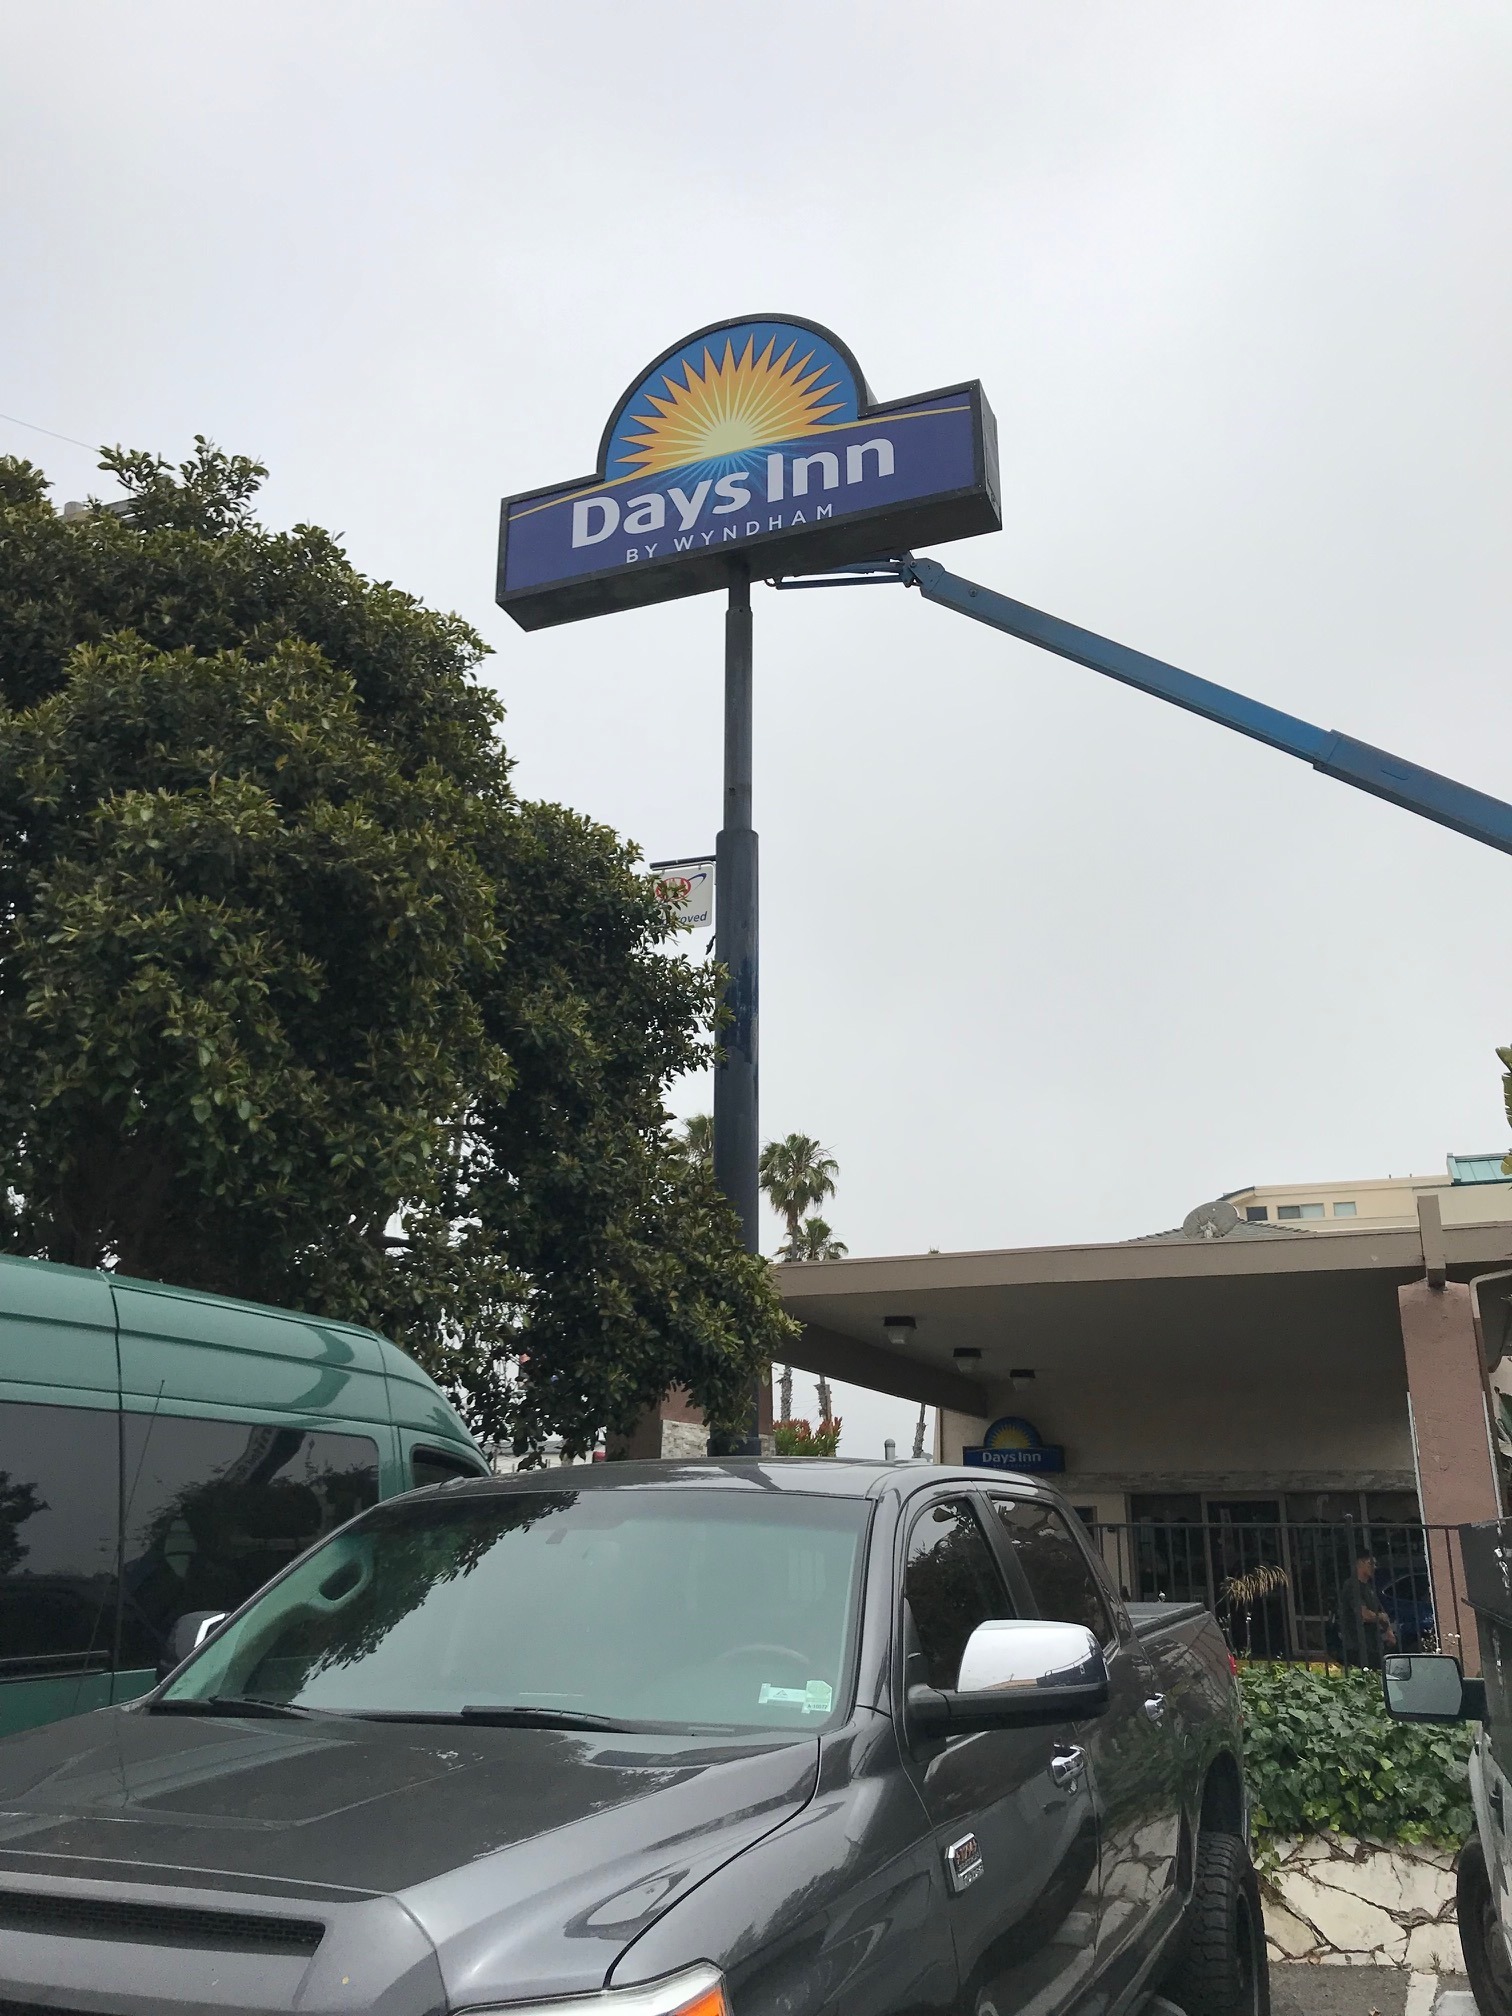 Pylon Sign for Days Inn with flexface